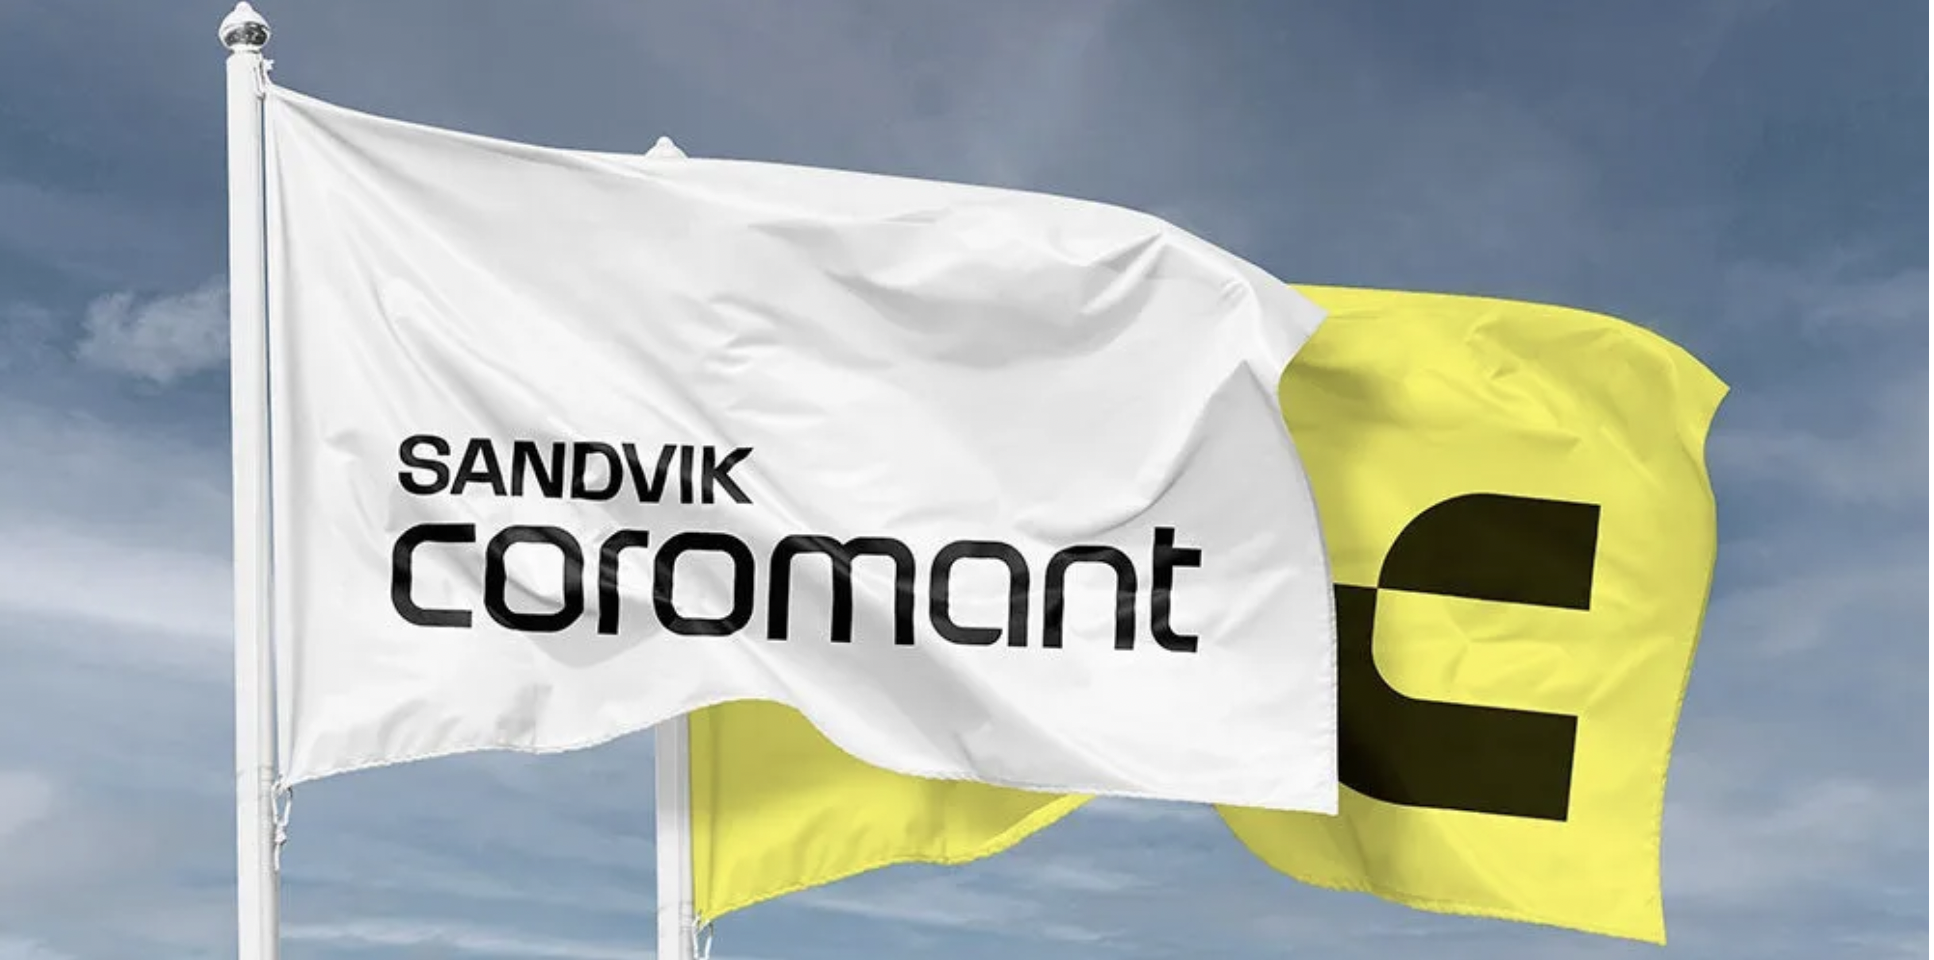 Sandvik Cormorant launches new brand identity